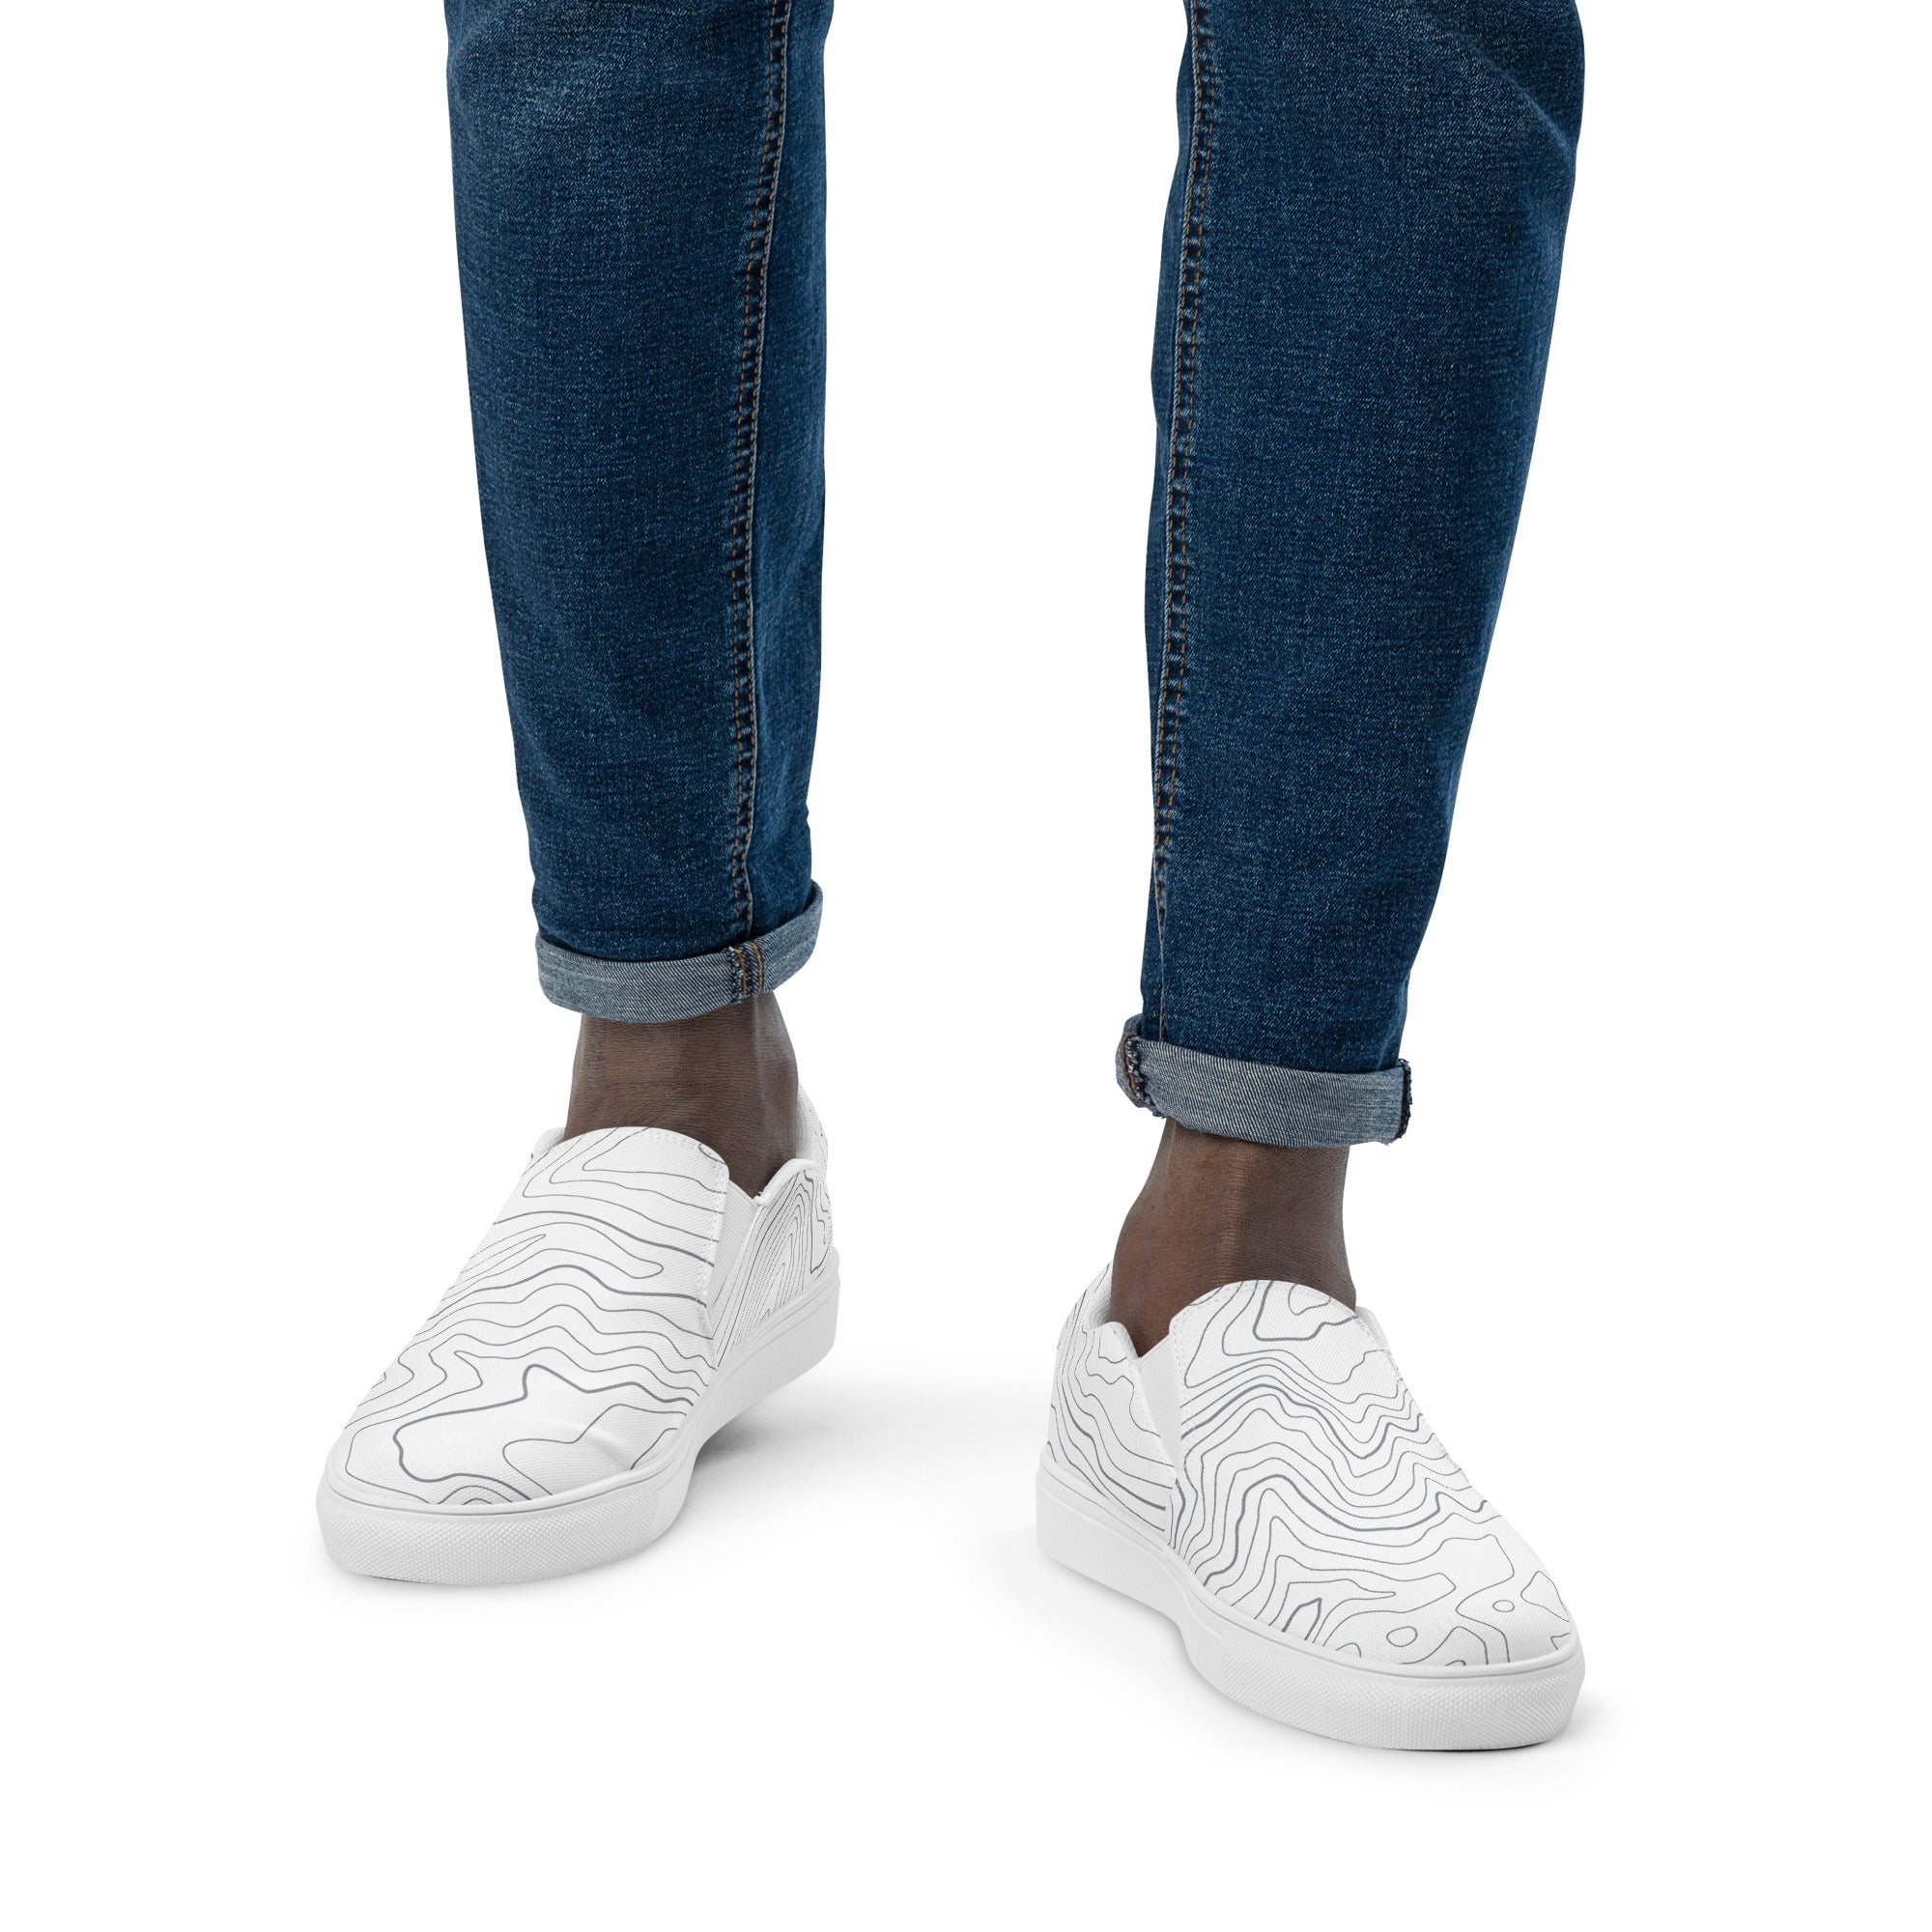 Men’s "White Topo" Slip-On Shoes